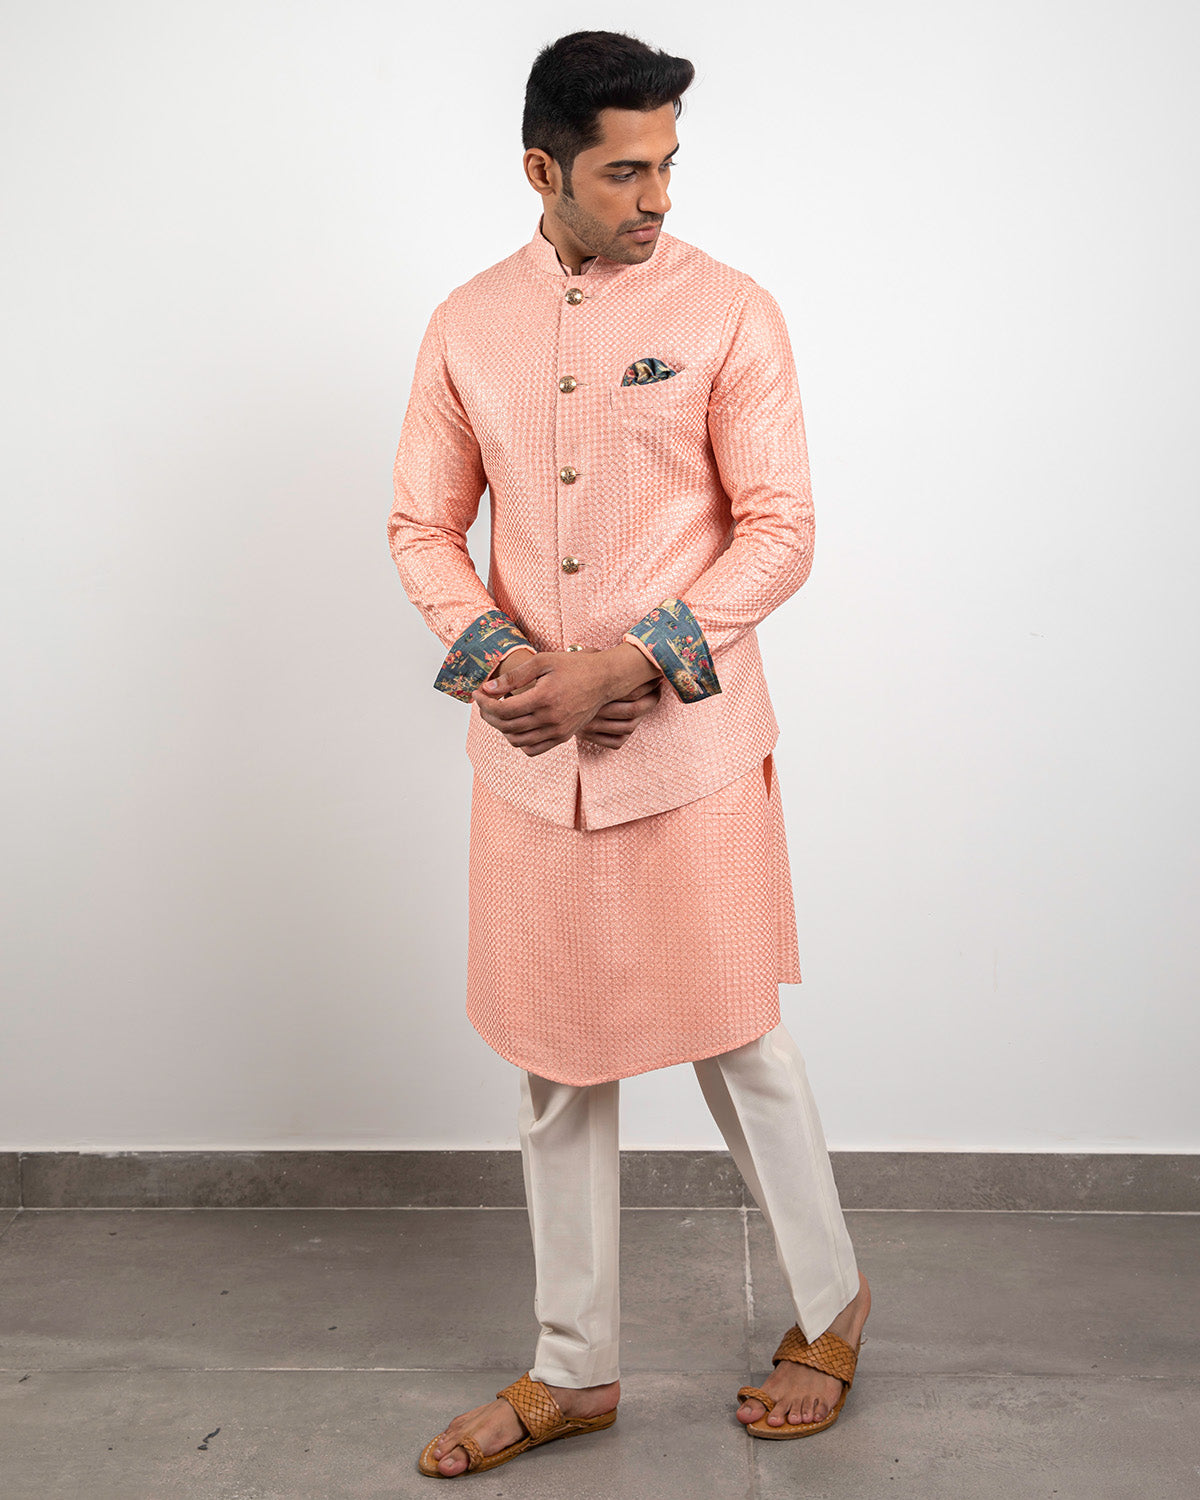 yourdesignerwear - White and Peach #Jodhpuri #Suit Price - $130.56 USD /  9555 INR SKU - GQB1410 For inquiries worldwide (WhatsApp / Viber)  +91-9601258099 Order Online @ http://ow.ly/khEo30mtdAz | Facebook